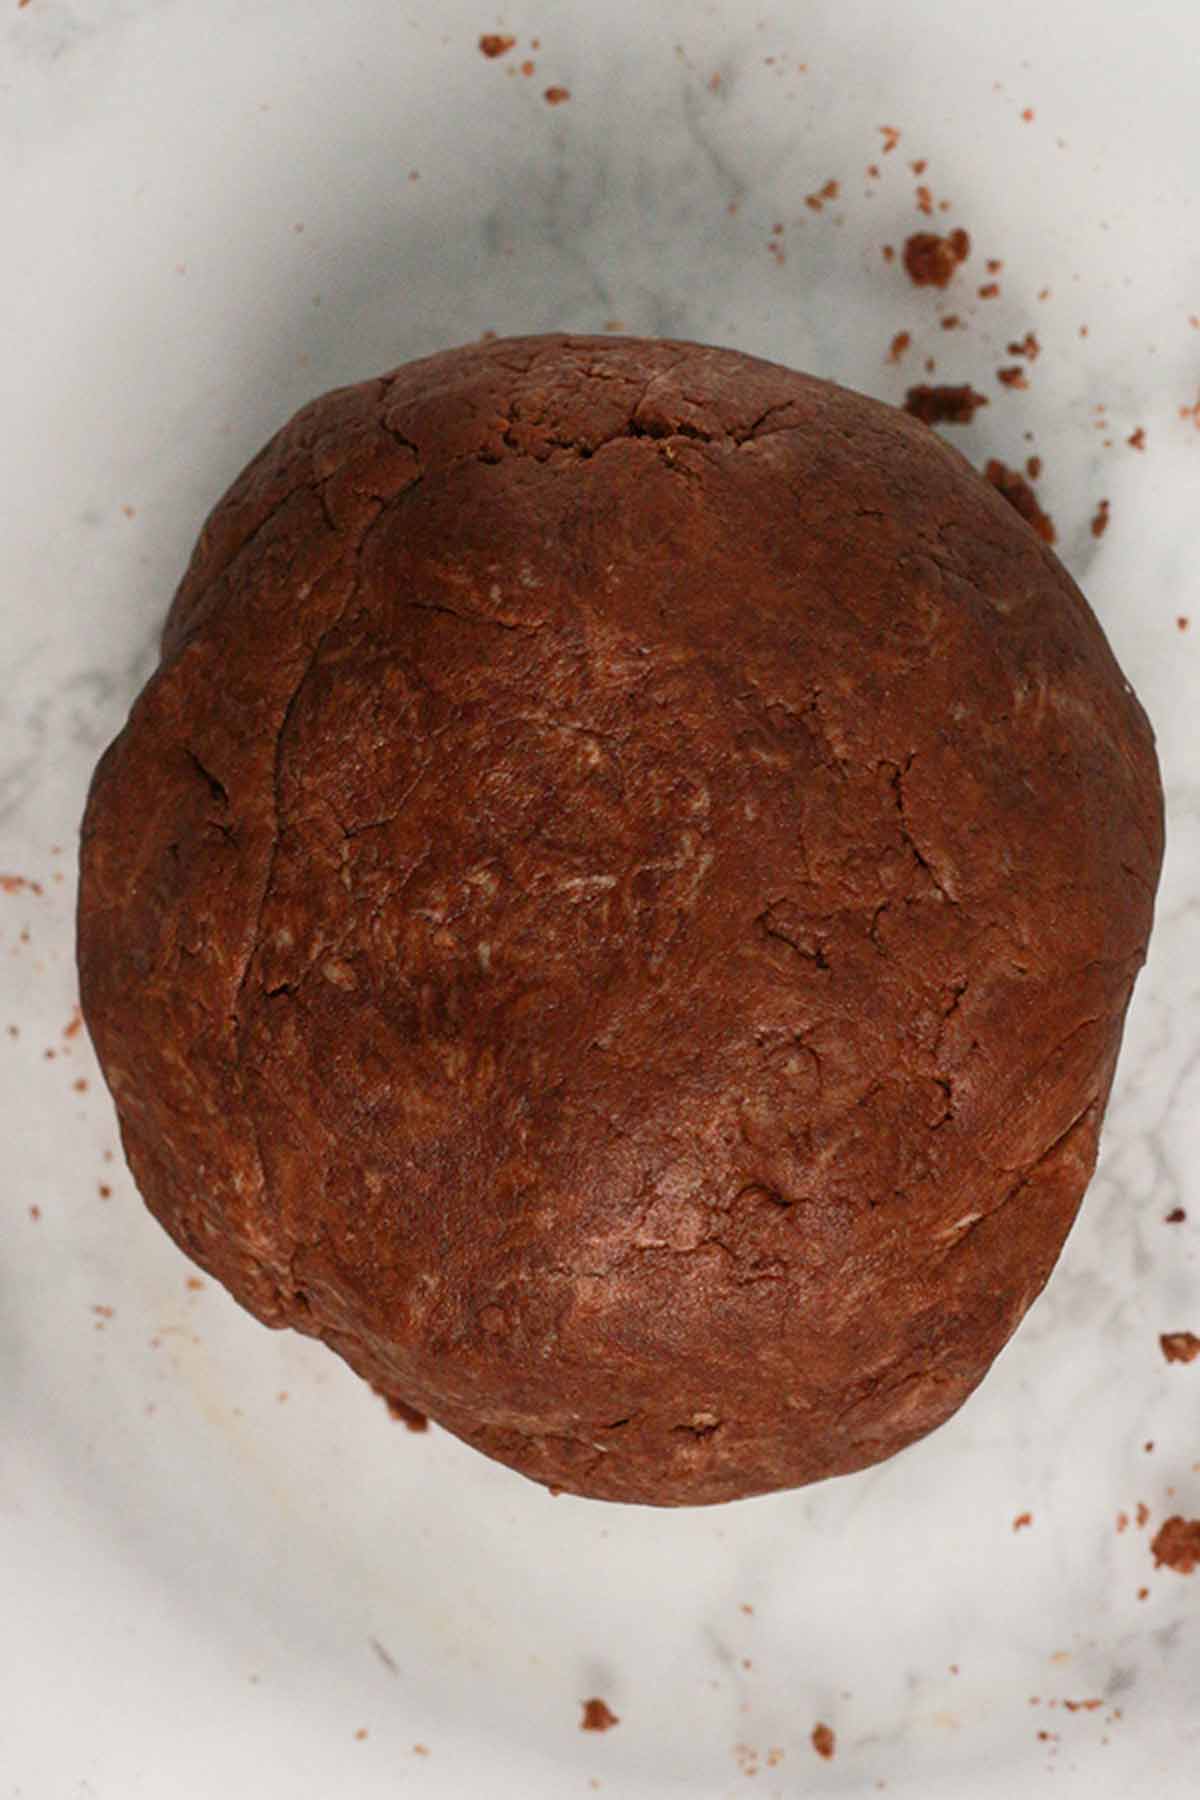 Ball Of Chocolate Dough